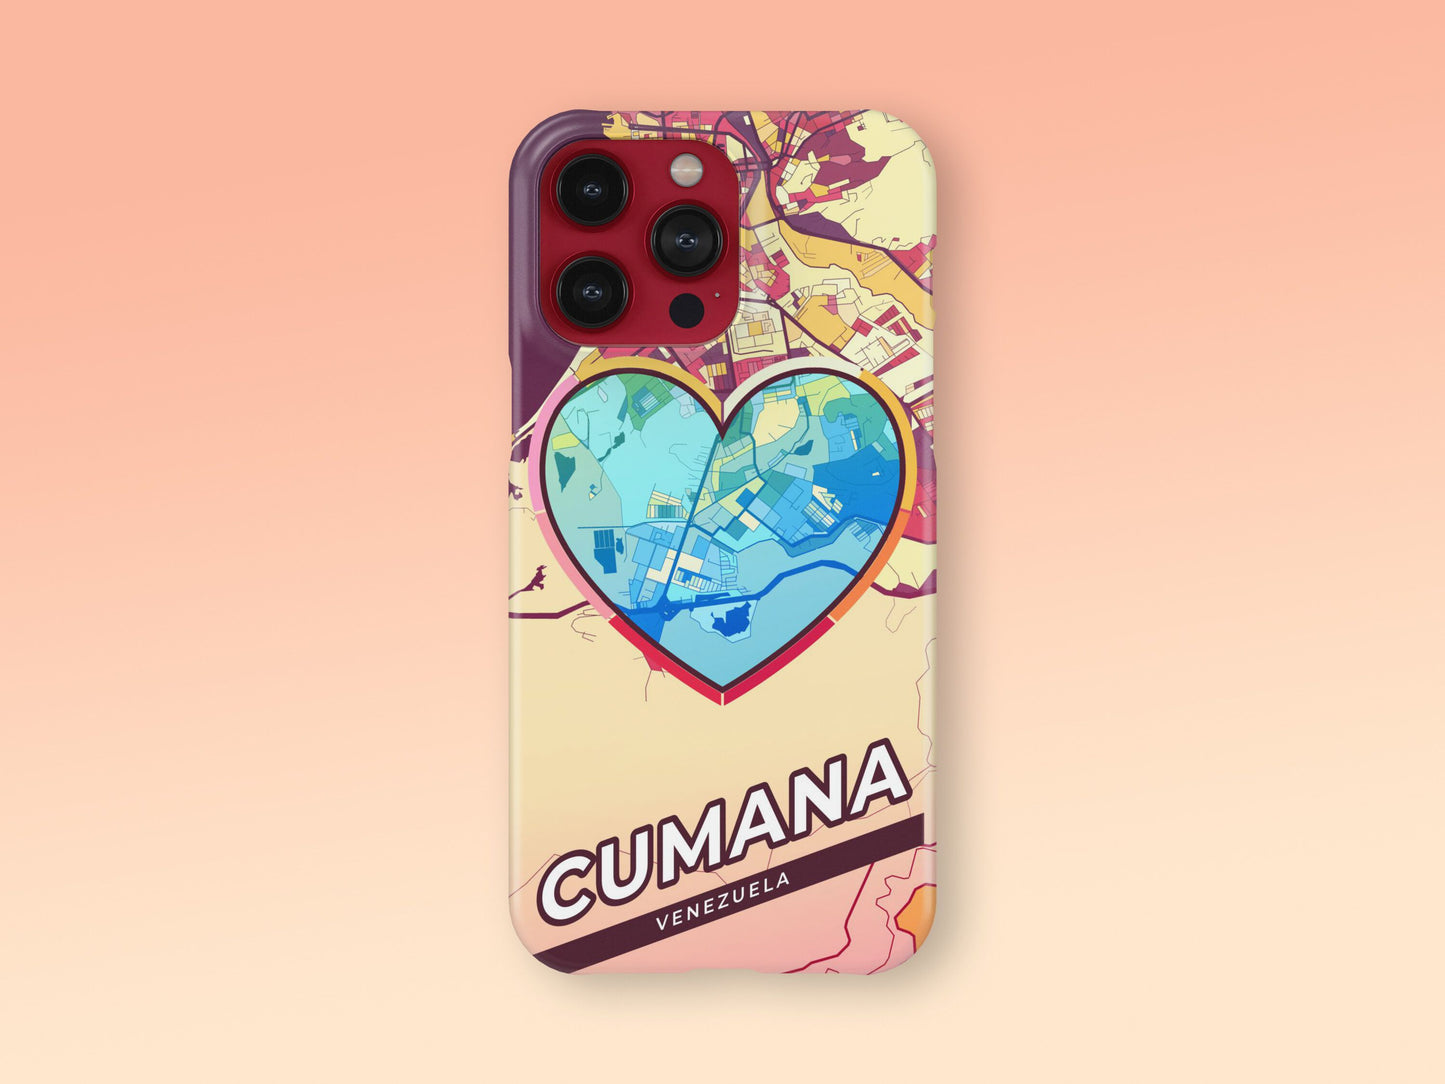 Cumana Venezuela slim phone case with colorful icon. Birthday, wedding or housewarming gift. Couple match cases. 2